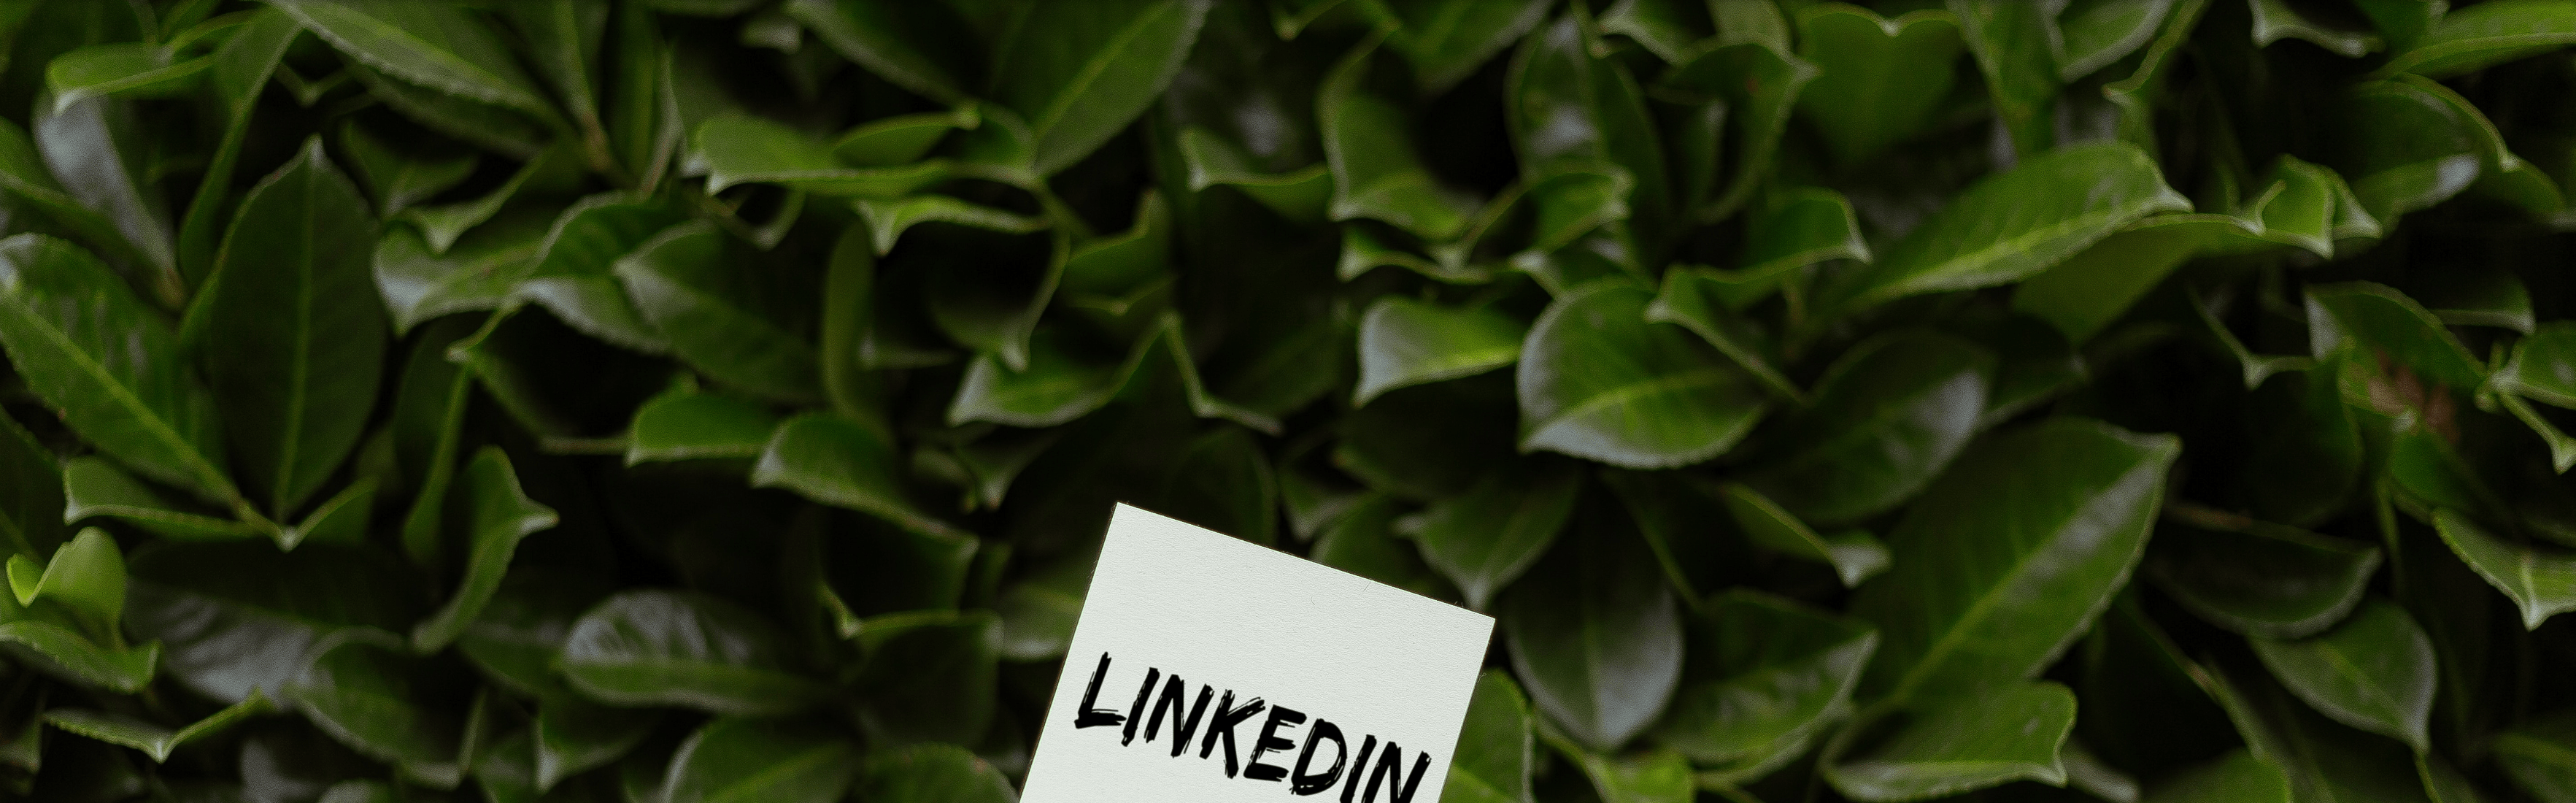 Polishing Your LinkedIn Profile: 10 Key Tips